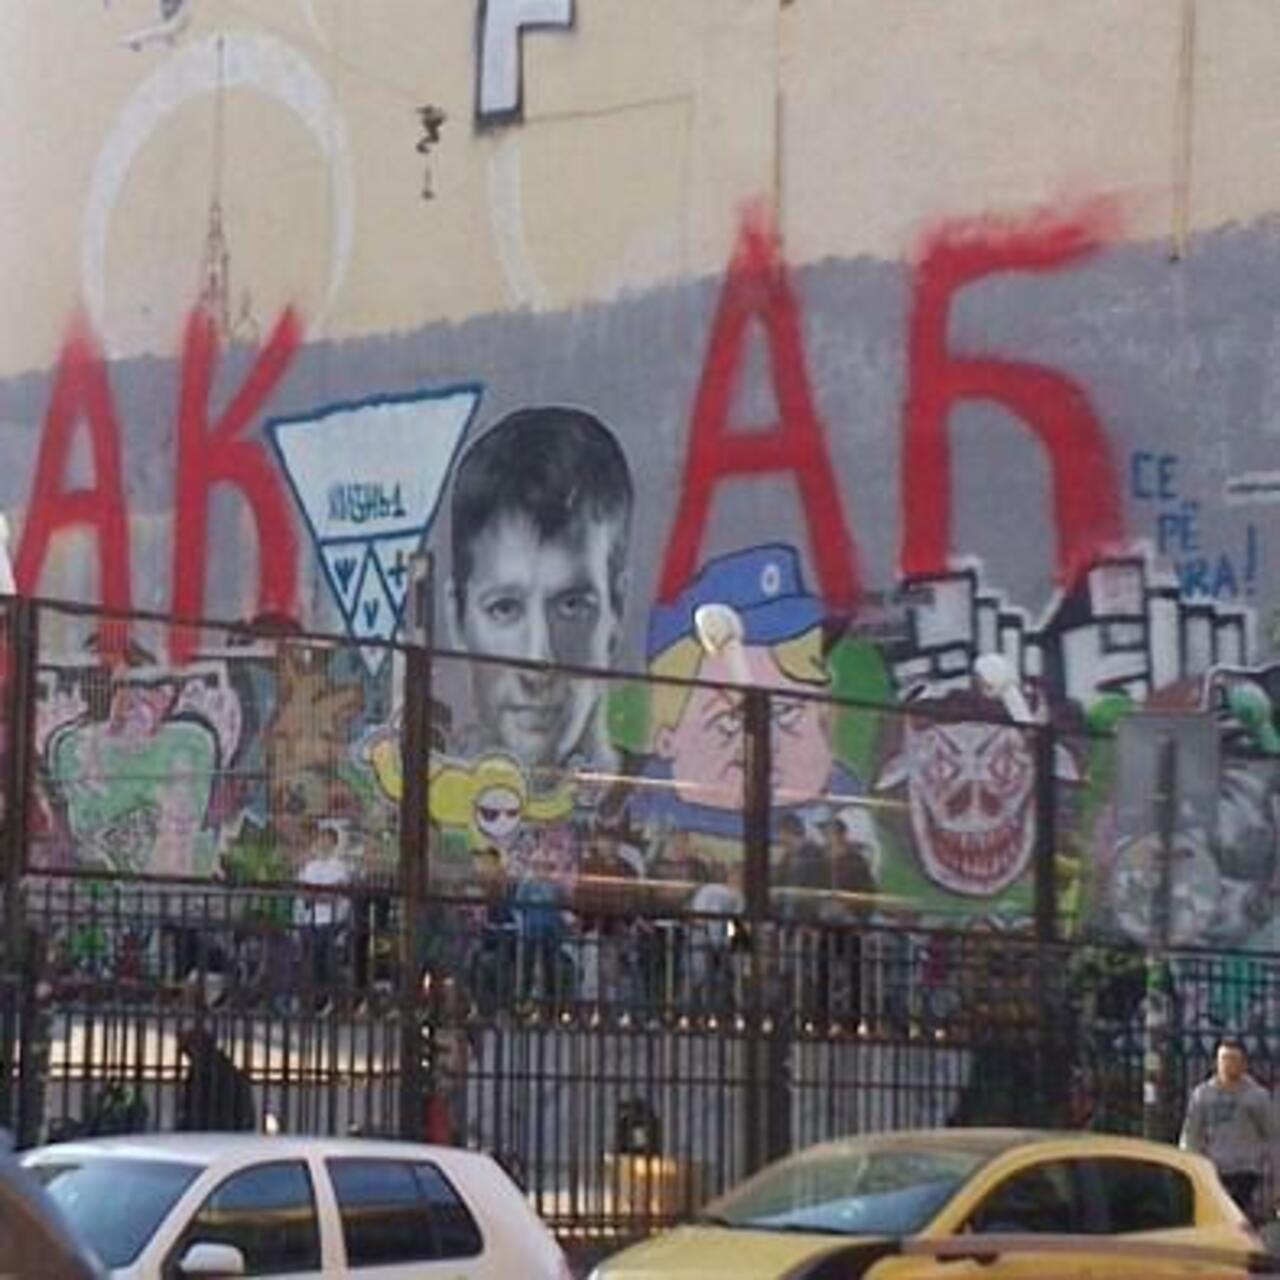 RT @artpushr: via #sophiatobacco "http://bit.ly/1NfFXIP" #graffiti #streetart http://t.co/uV0xEneoCO